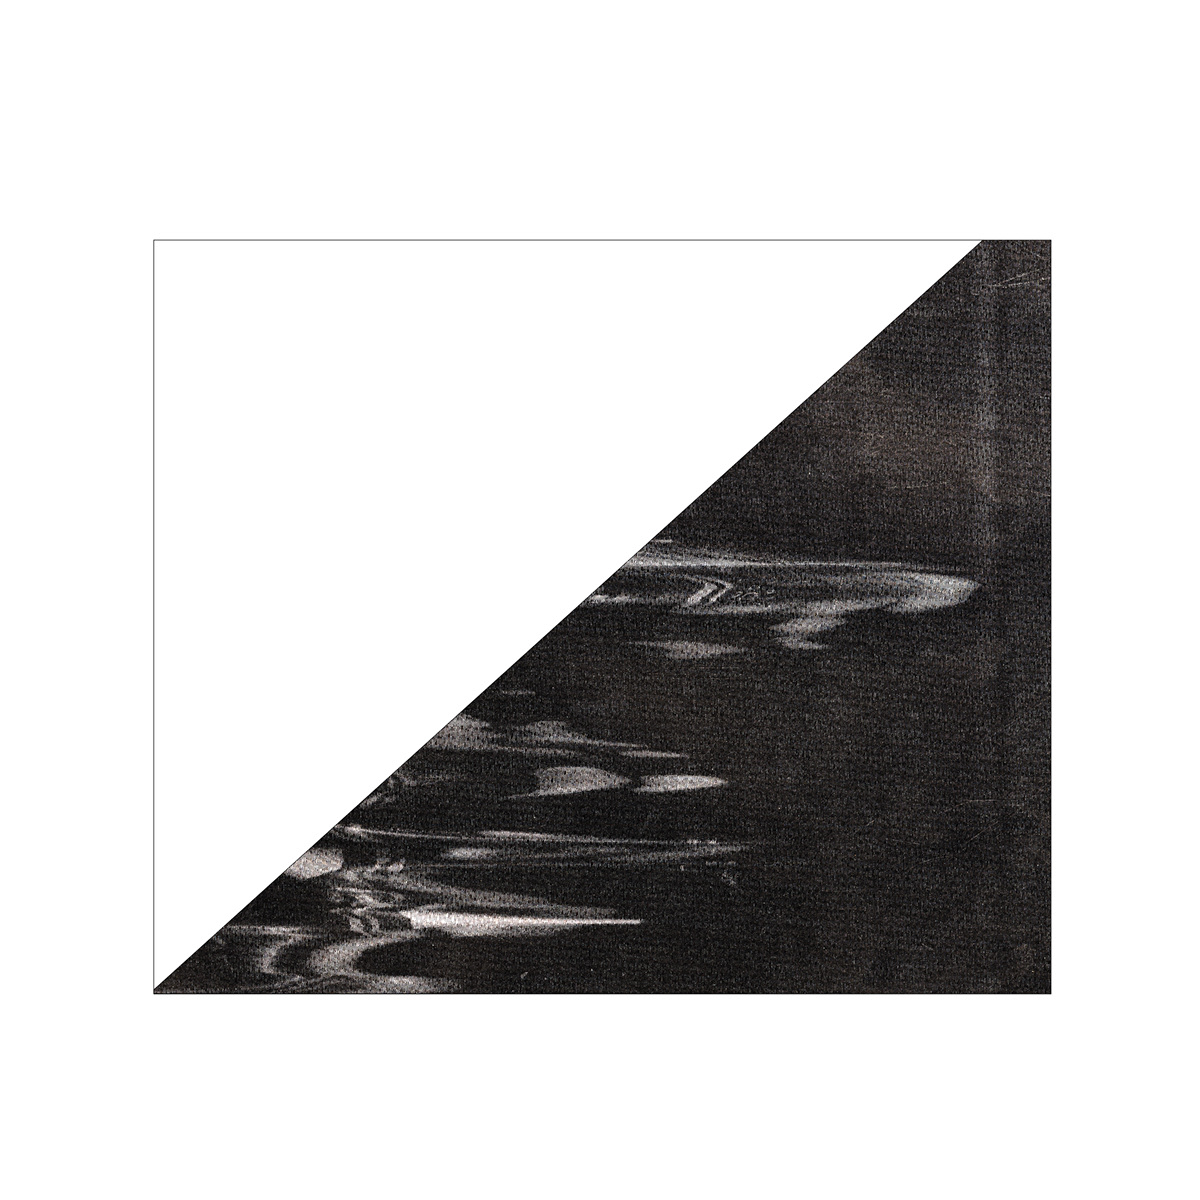 music cd sound art collage texture atmosphere industrial design dark mood Moody scanner distortion